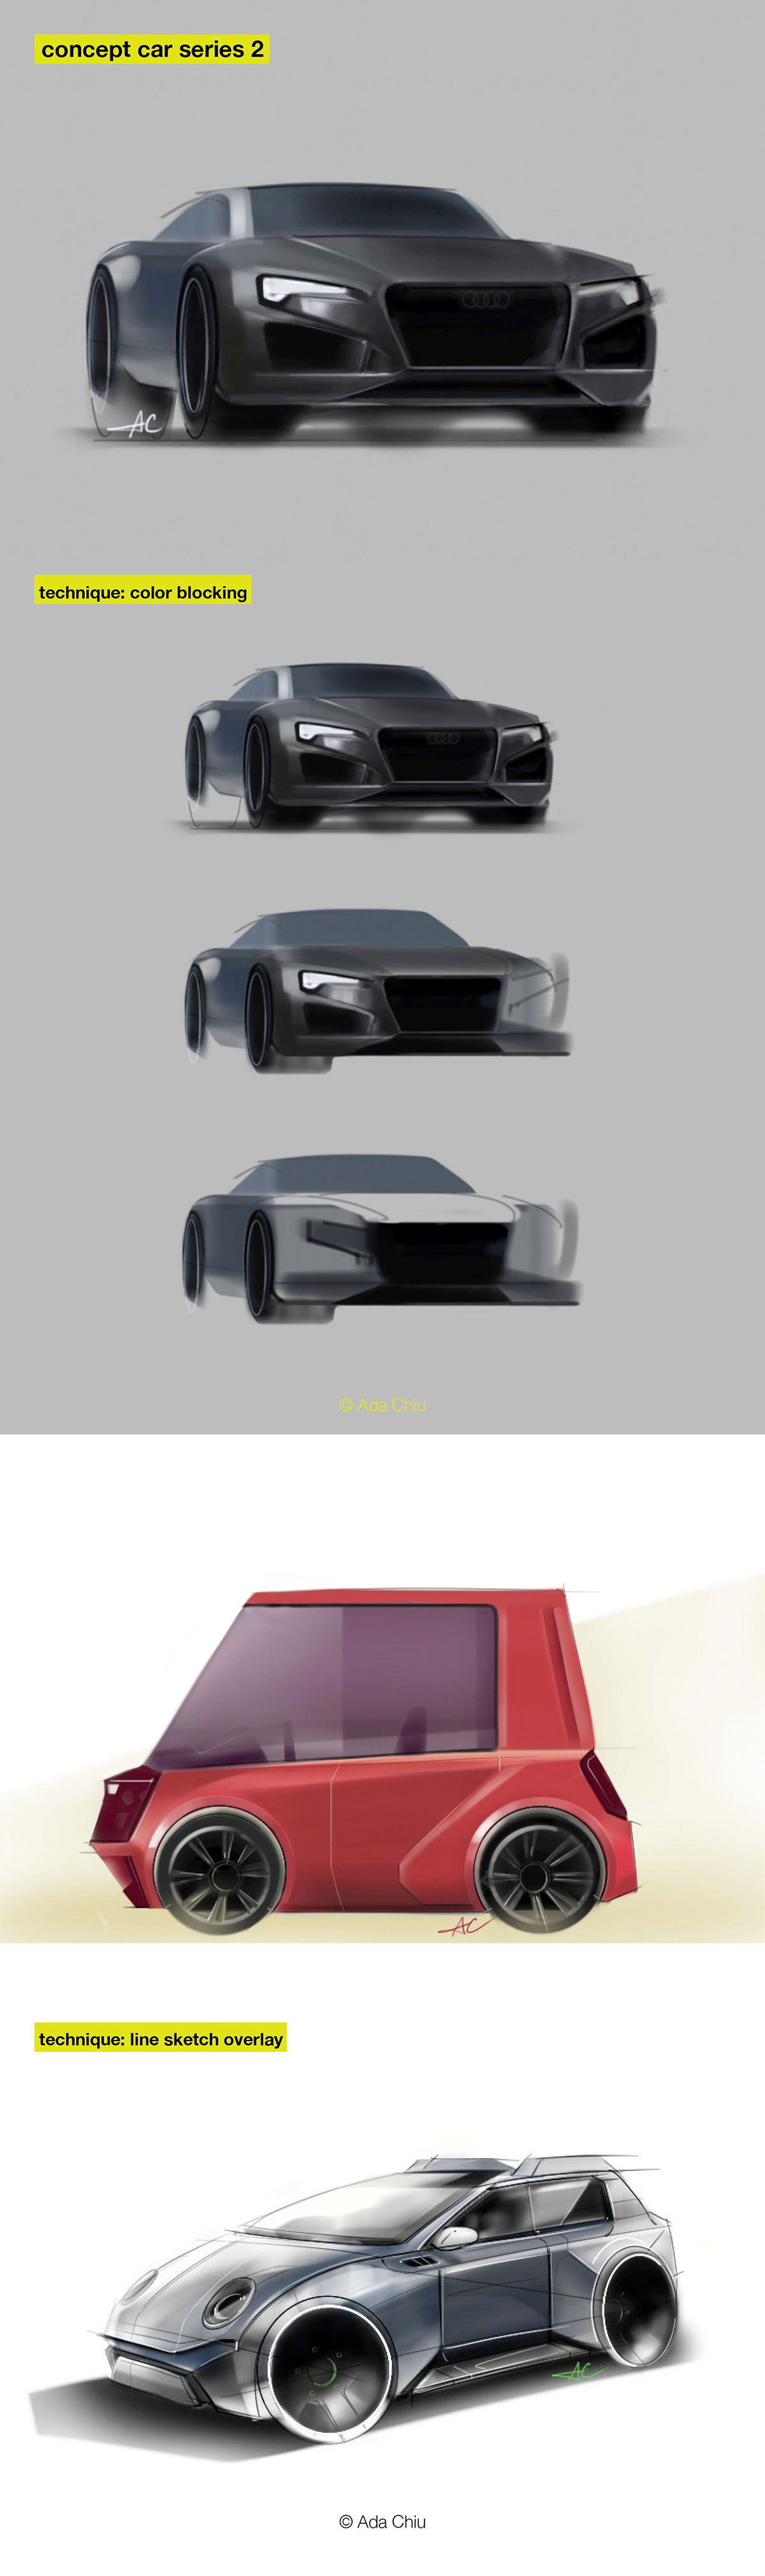 concept concept art concept design Audi Supercars sketchbookpro Autodesk design sketching idsketching digital painting